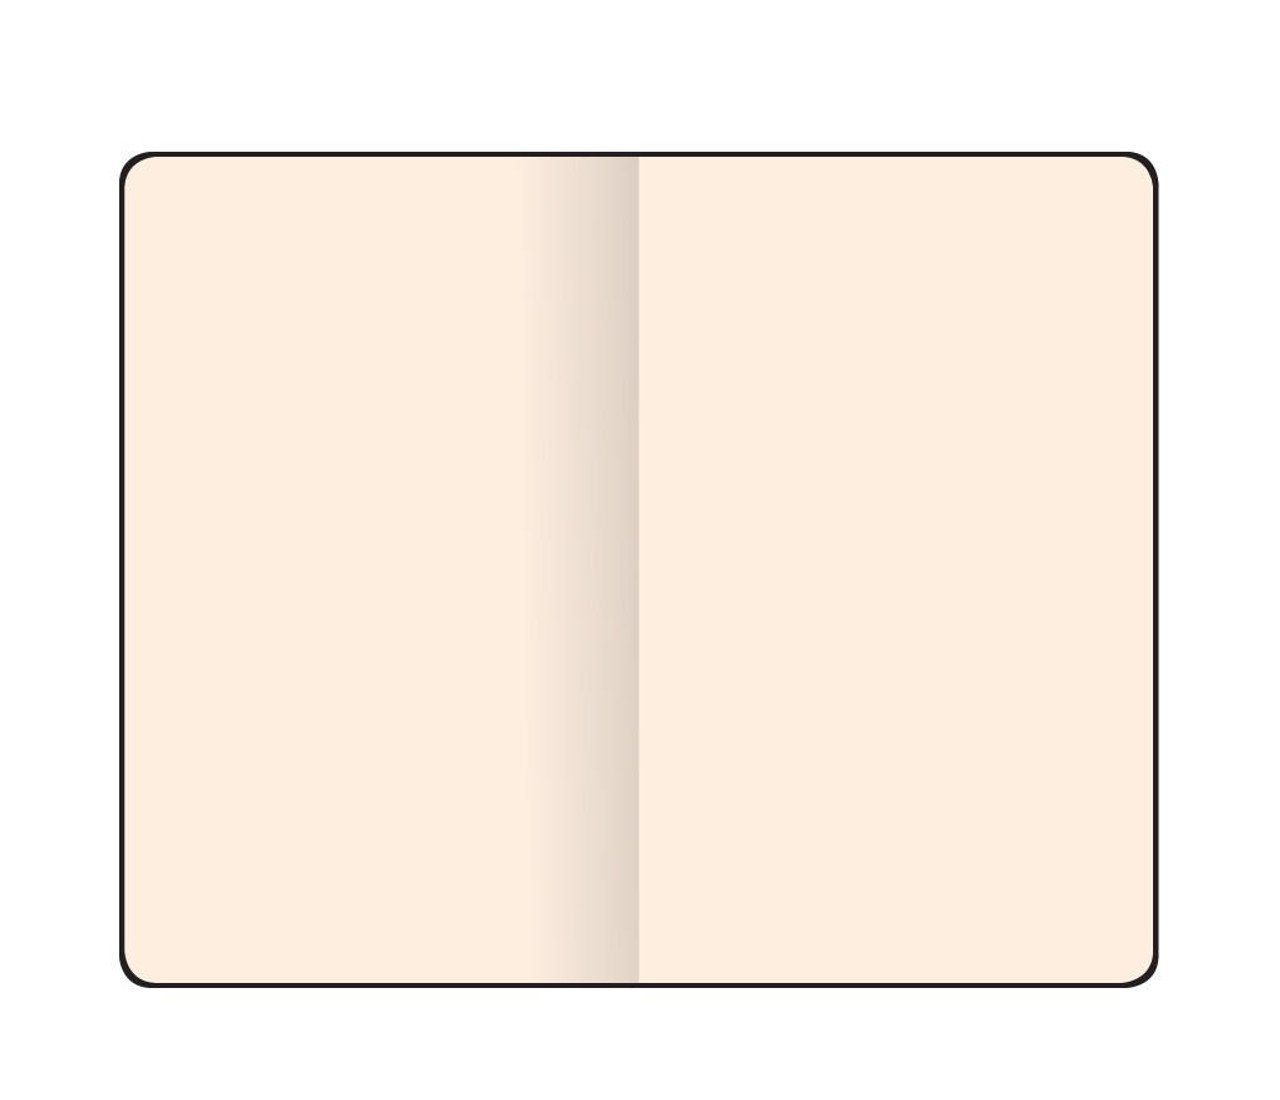 Globel Elastikband Seiten Flexbook Flexbook blanko/linierte * 17 cm verschied Rot Notizbuch / Blanko 24 Notizbuch /